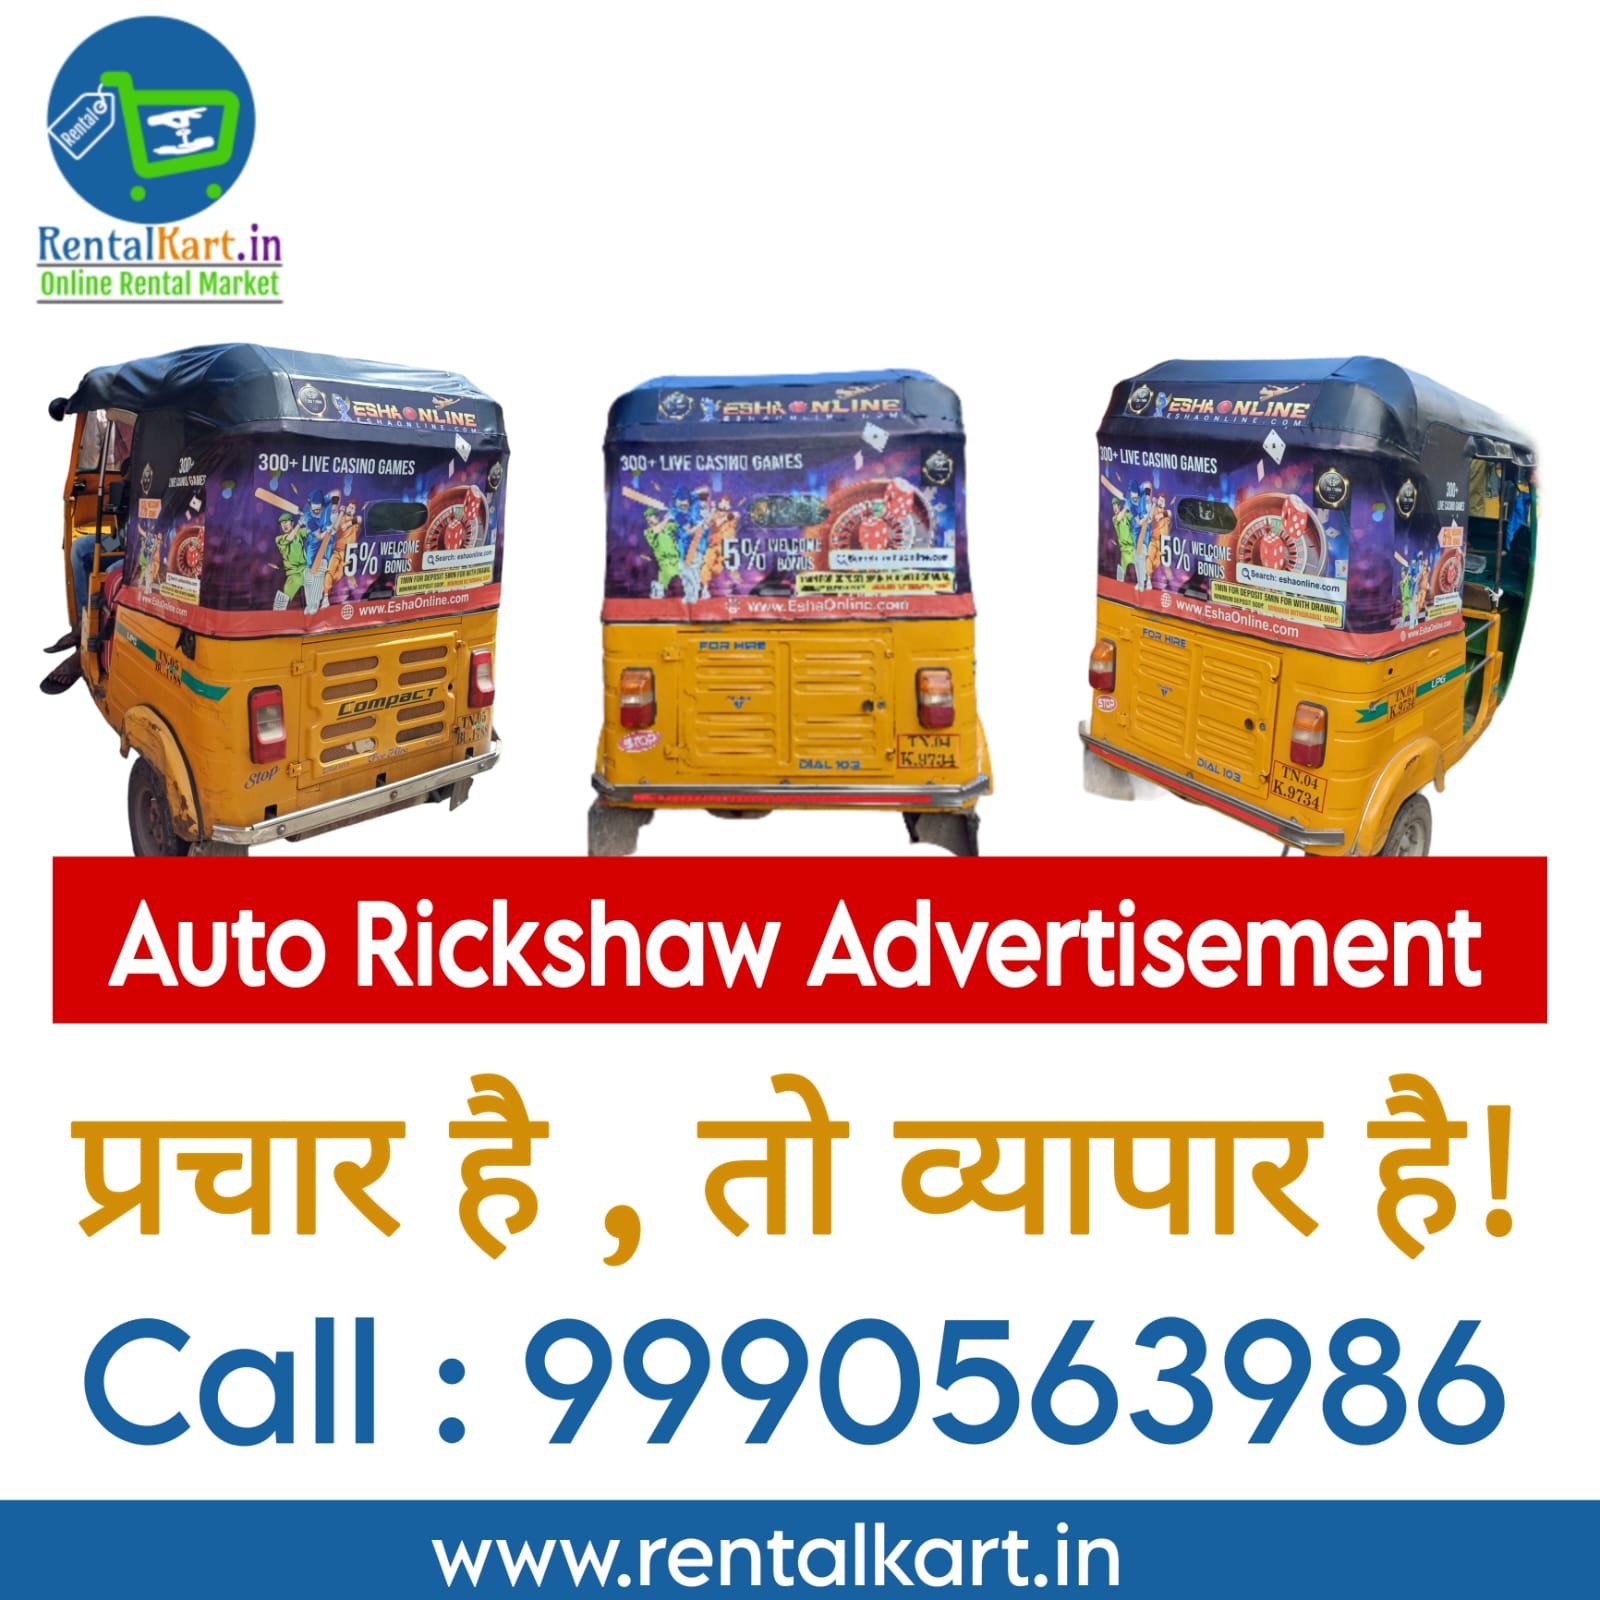 Pan-India Auto Rickshaw Ads – Rentalkart.in